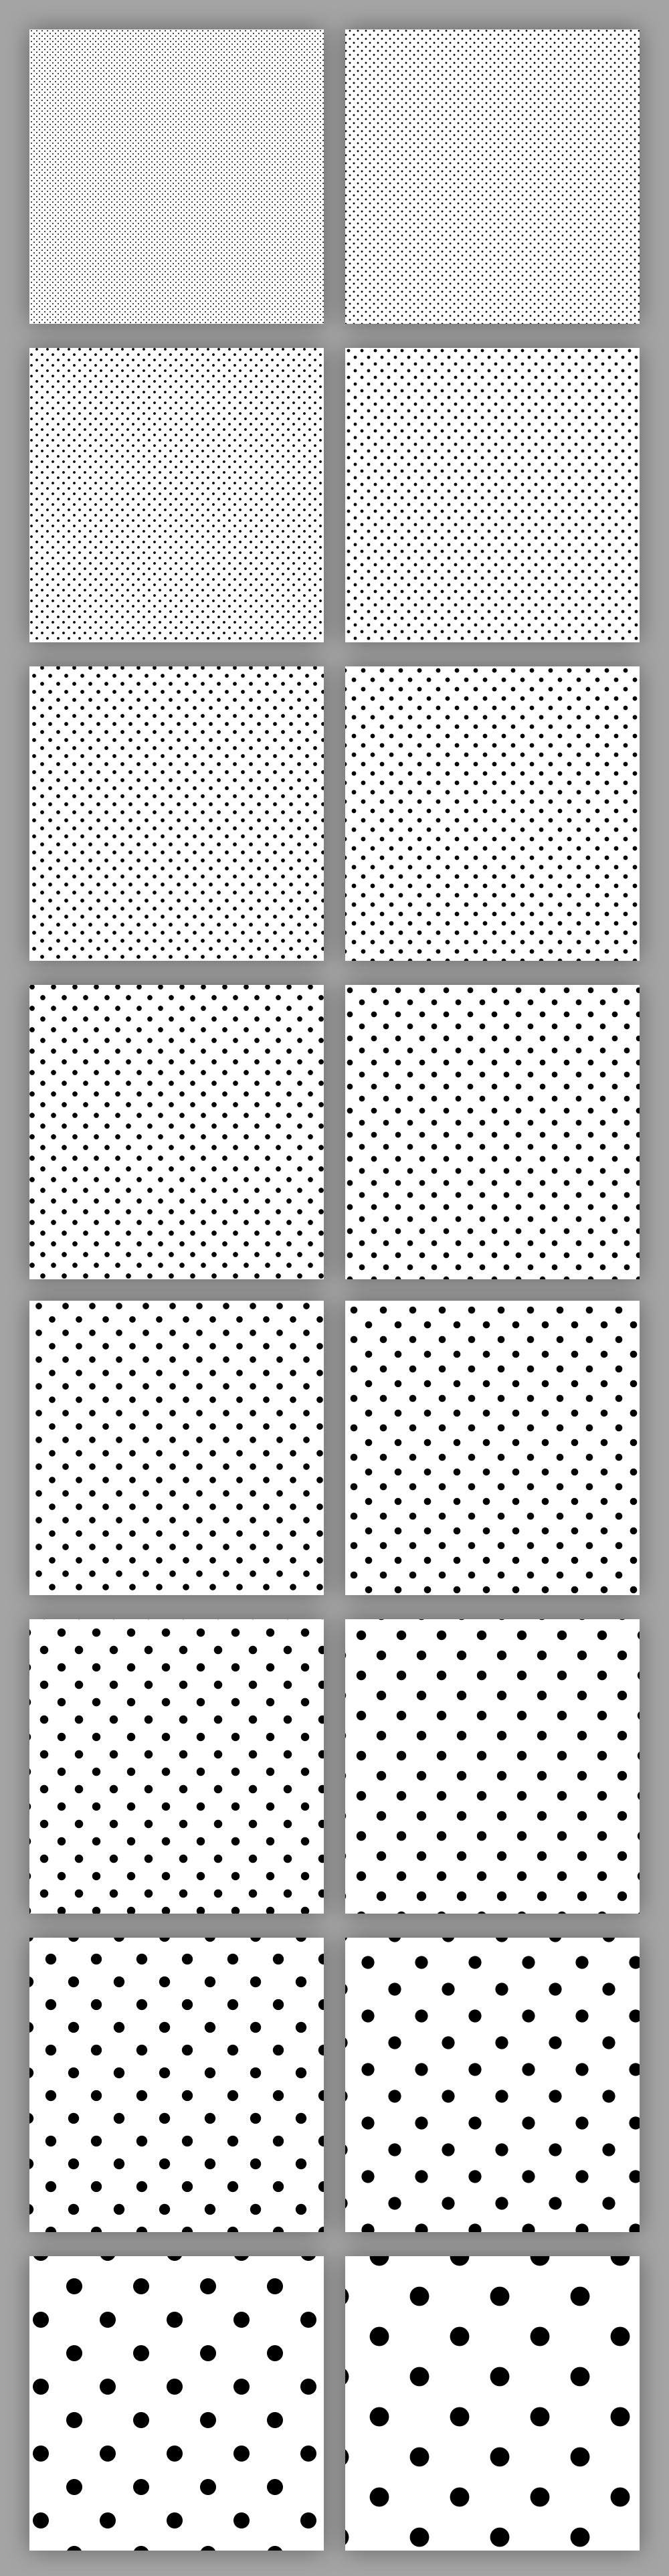 halftone-patterns